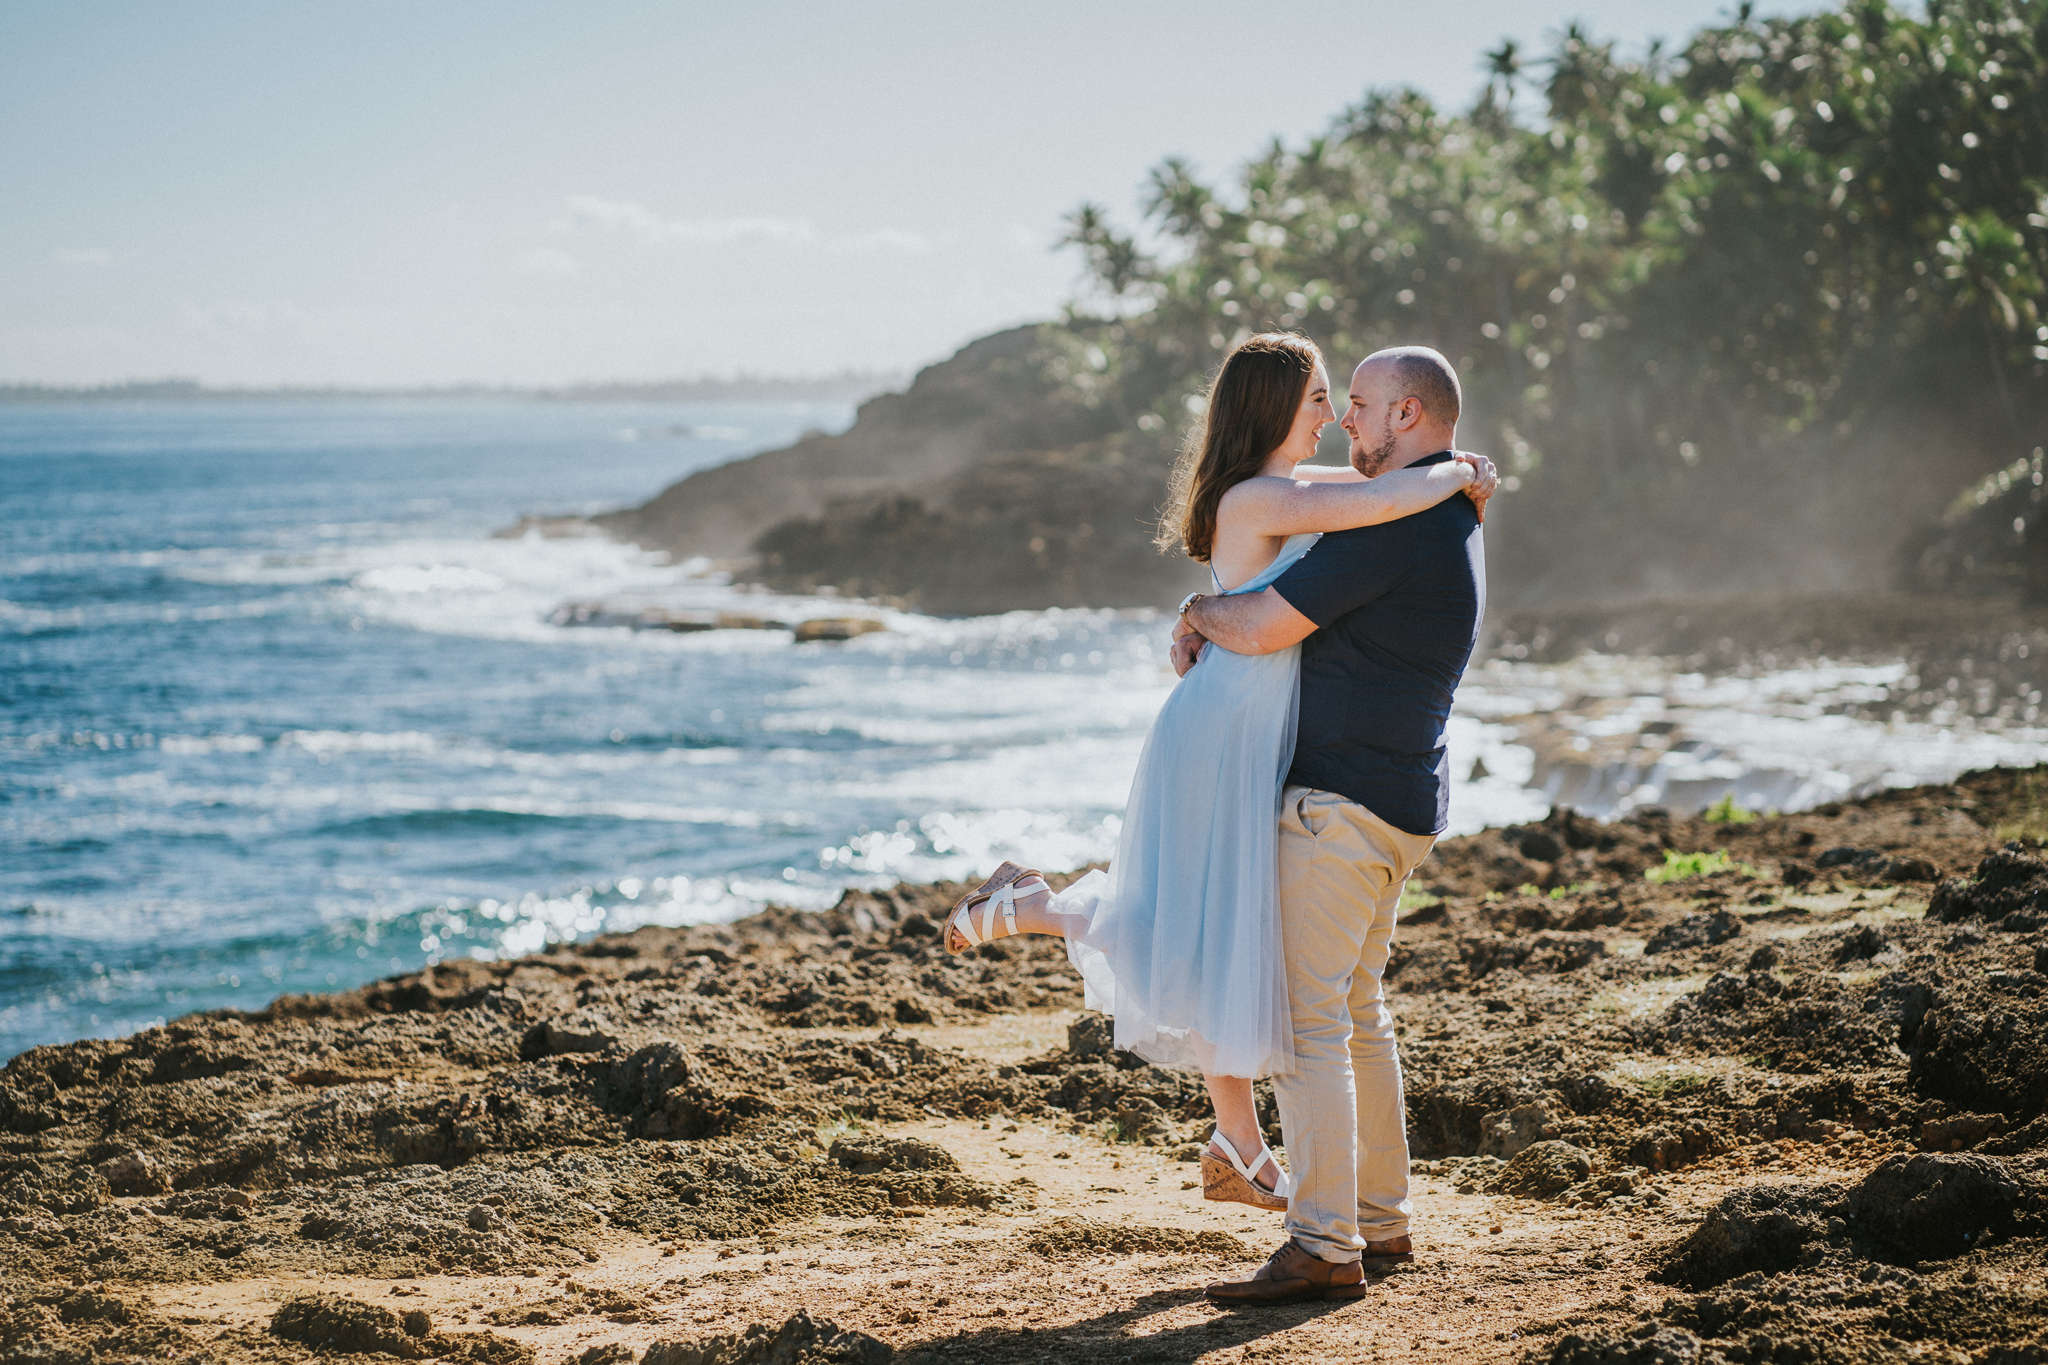 Man hugging girl in blue dress on beach